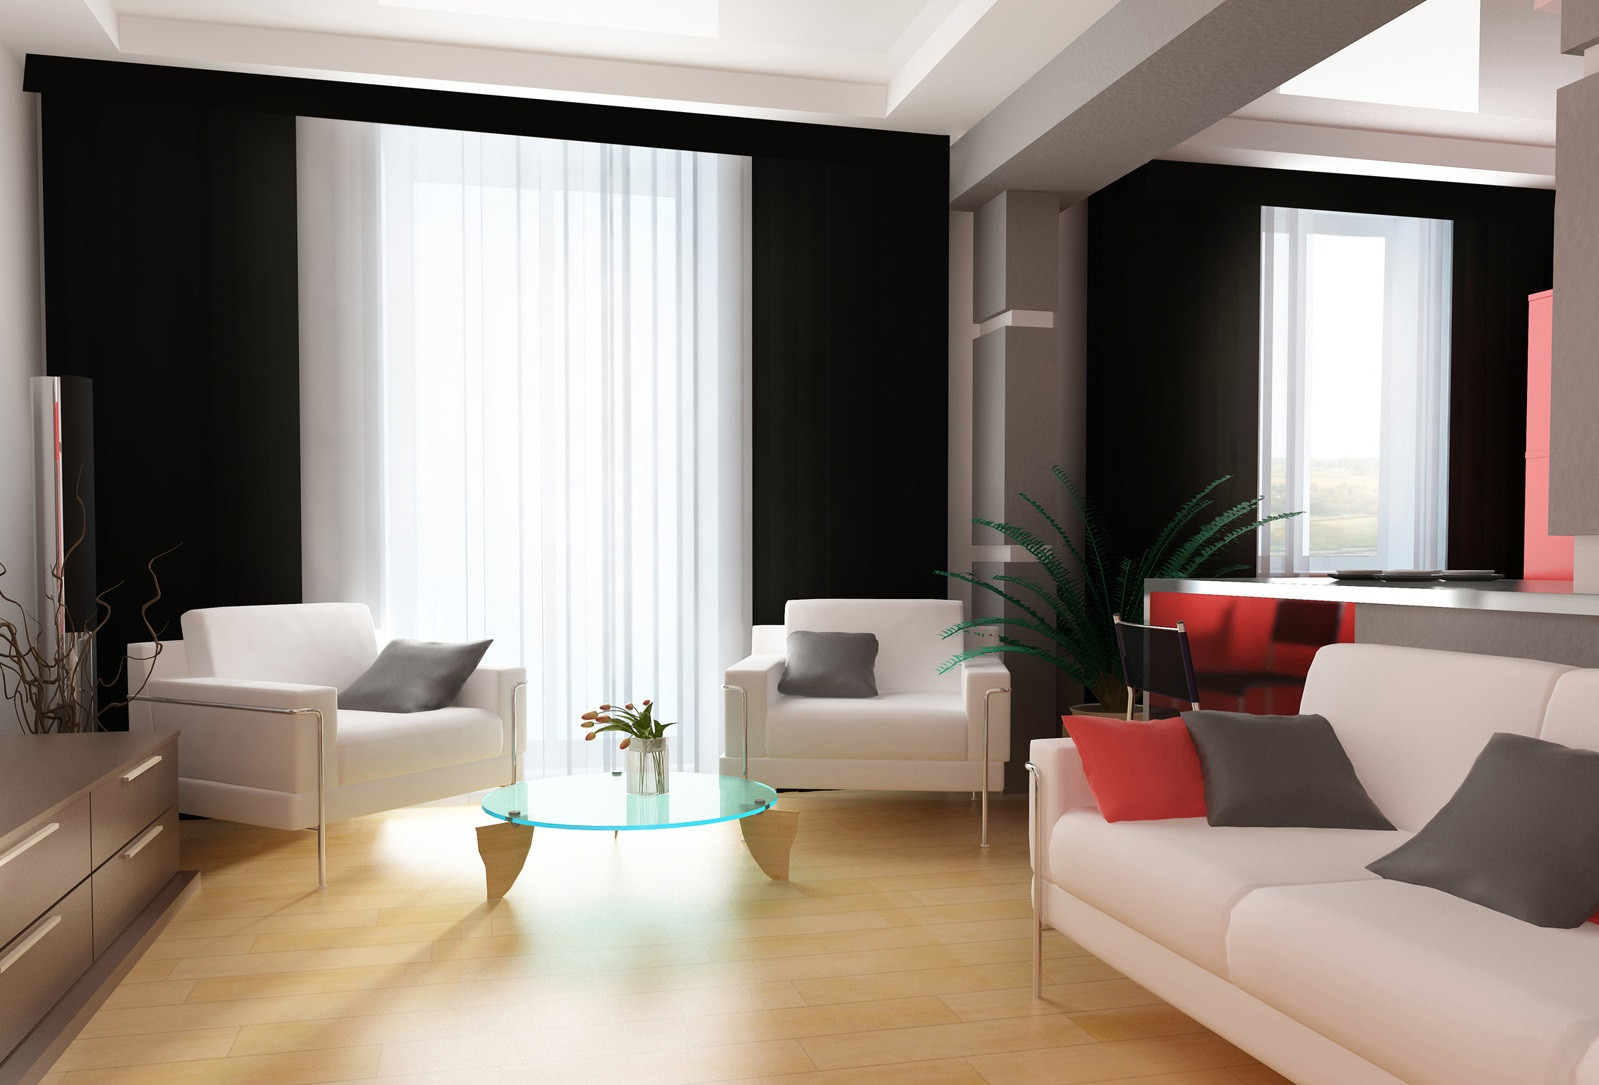 Living Room Drapes Ideas
 Awesome Living Room Curtains Designs Amaza Design